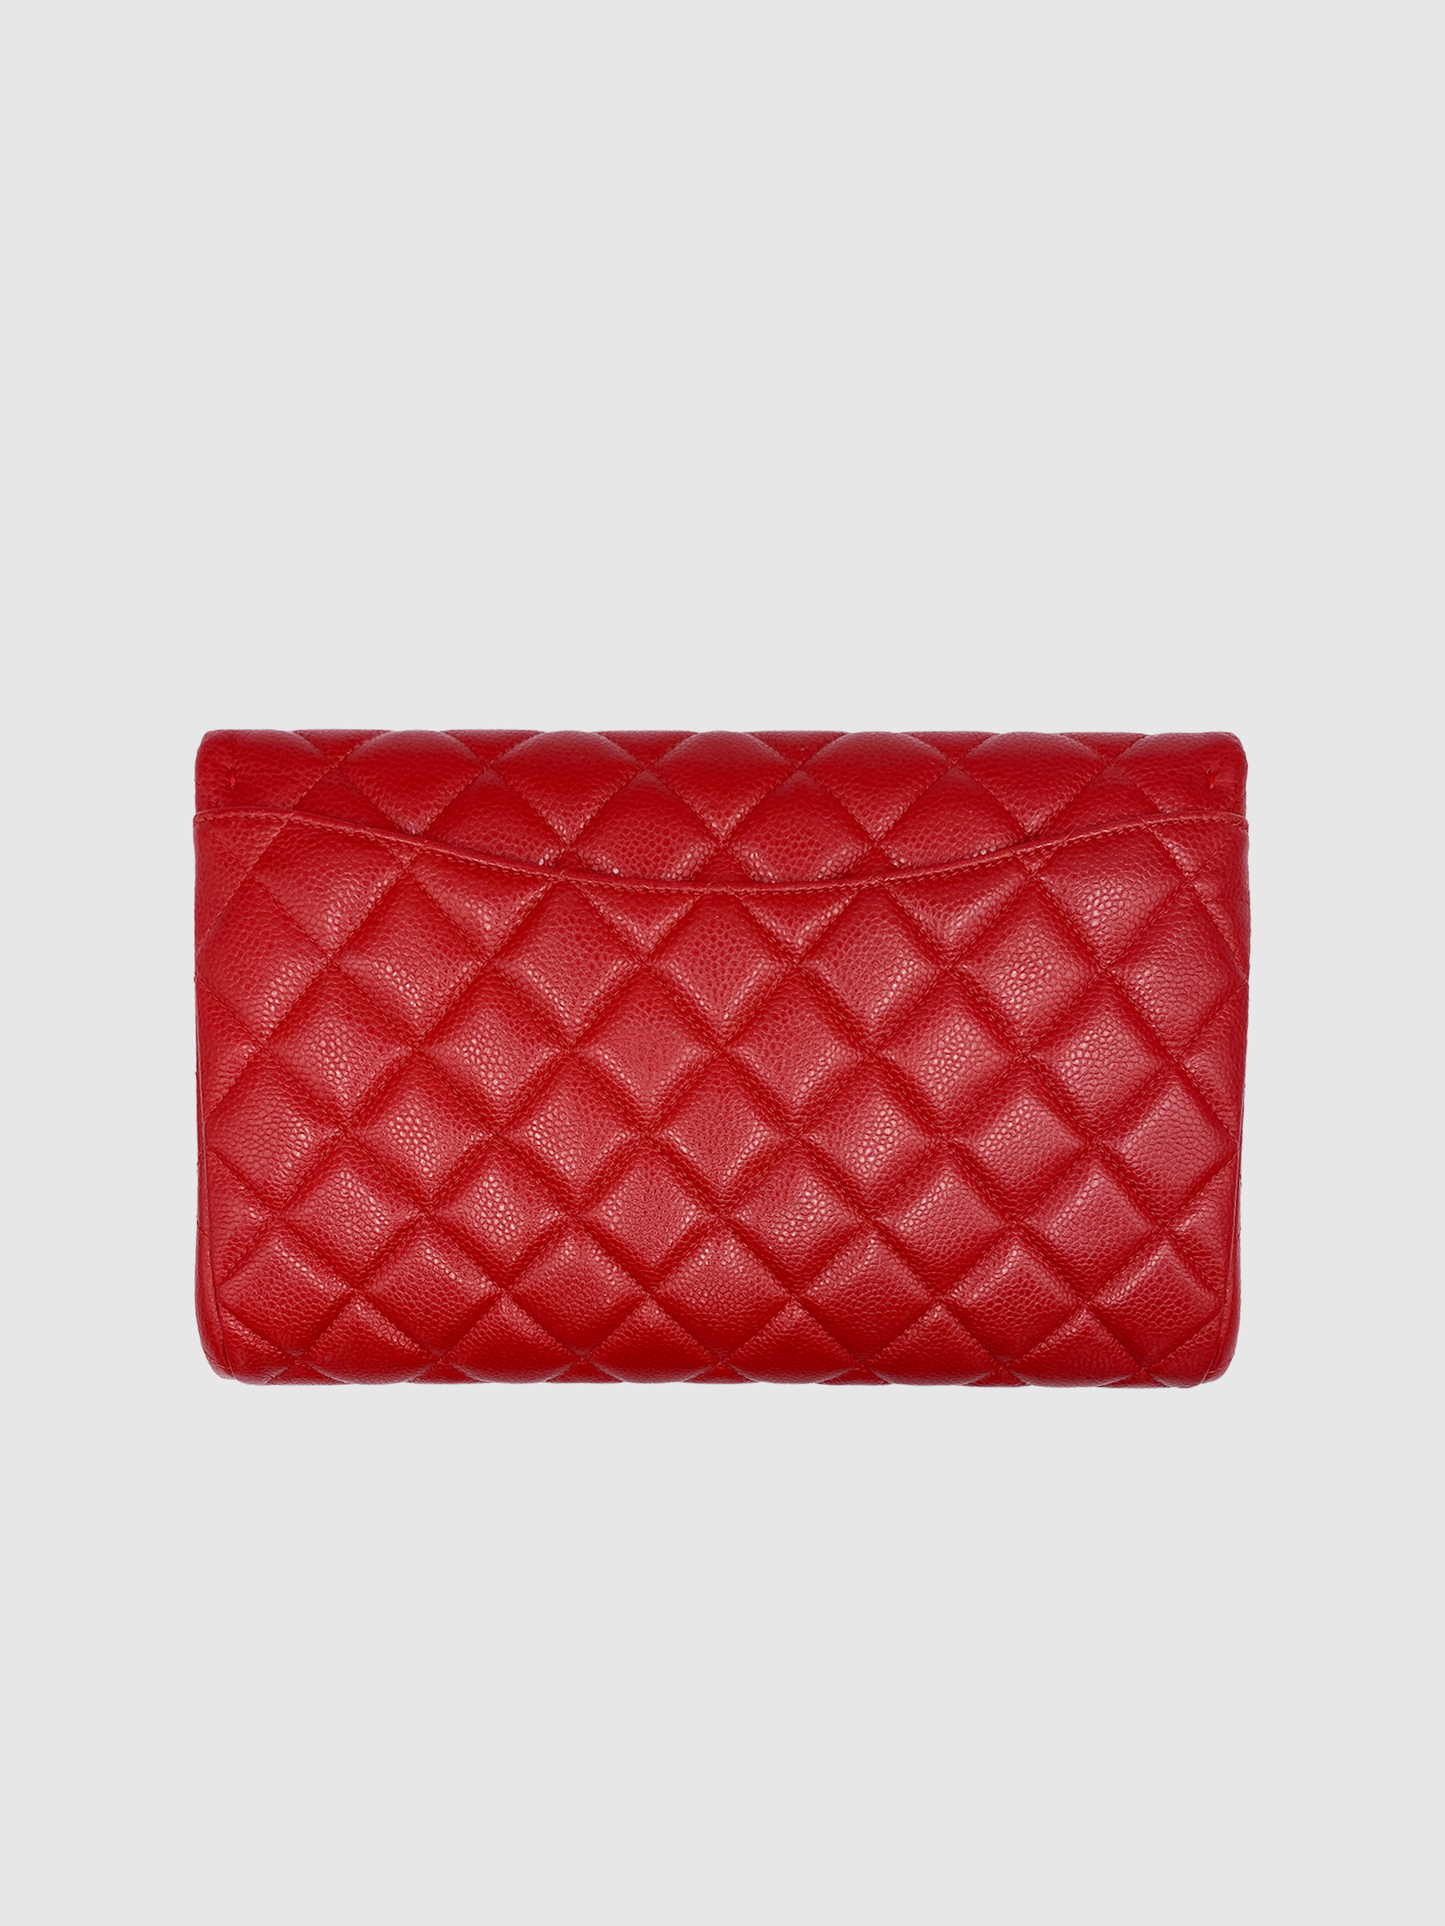 Chanel Red Caviar Maxi Flap Bag